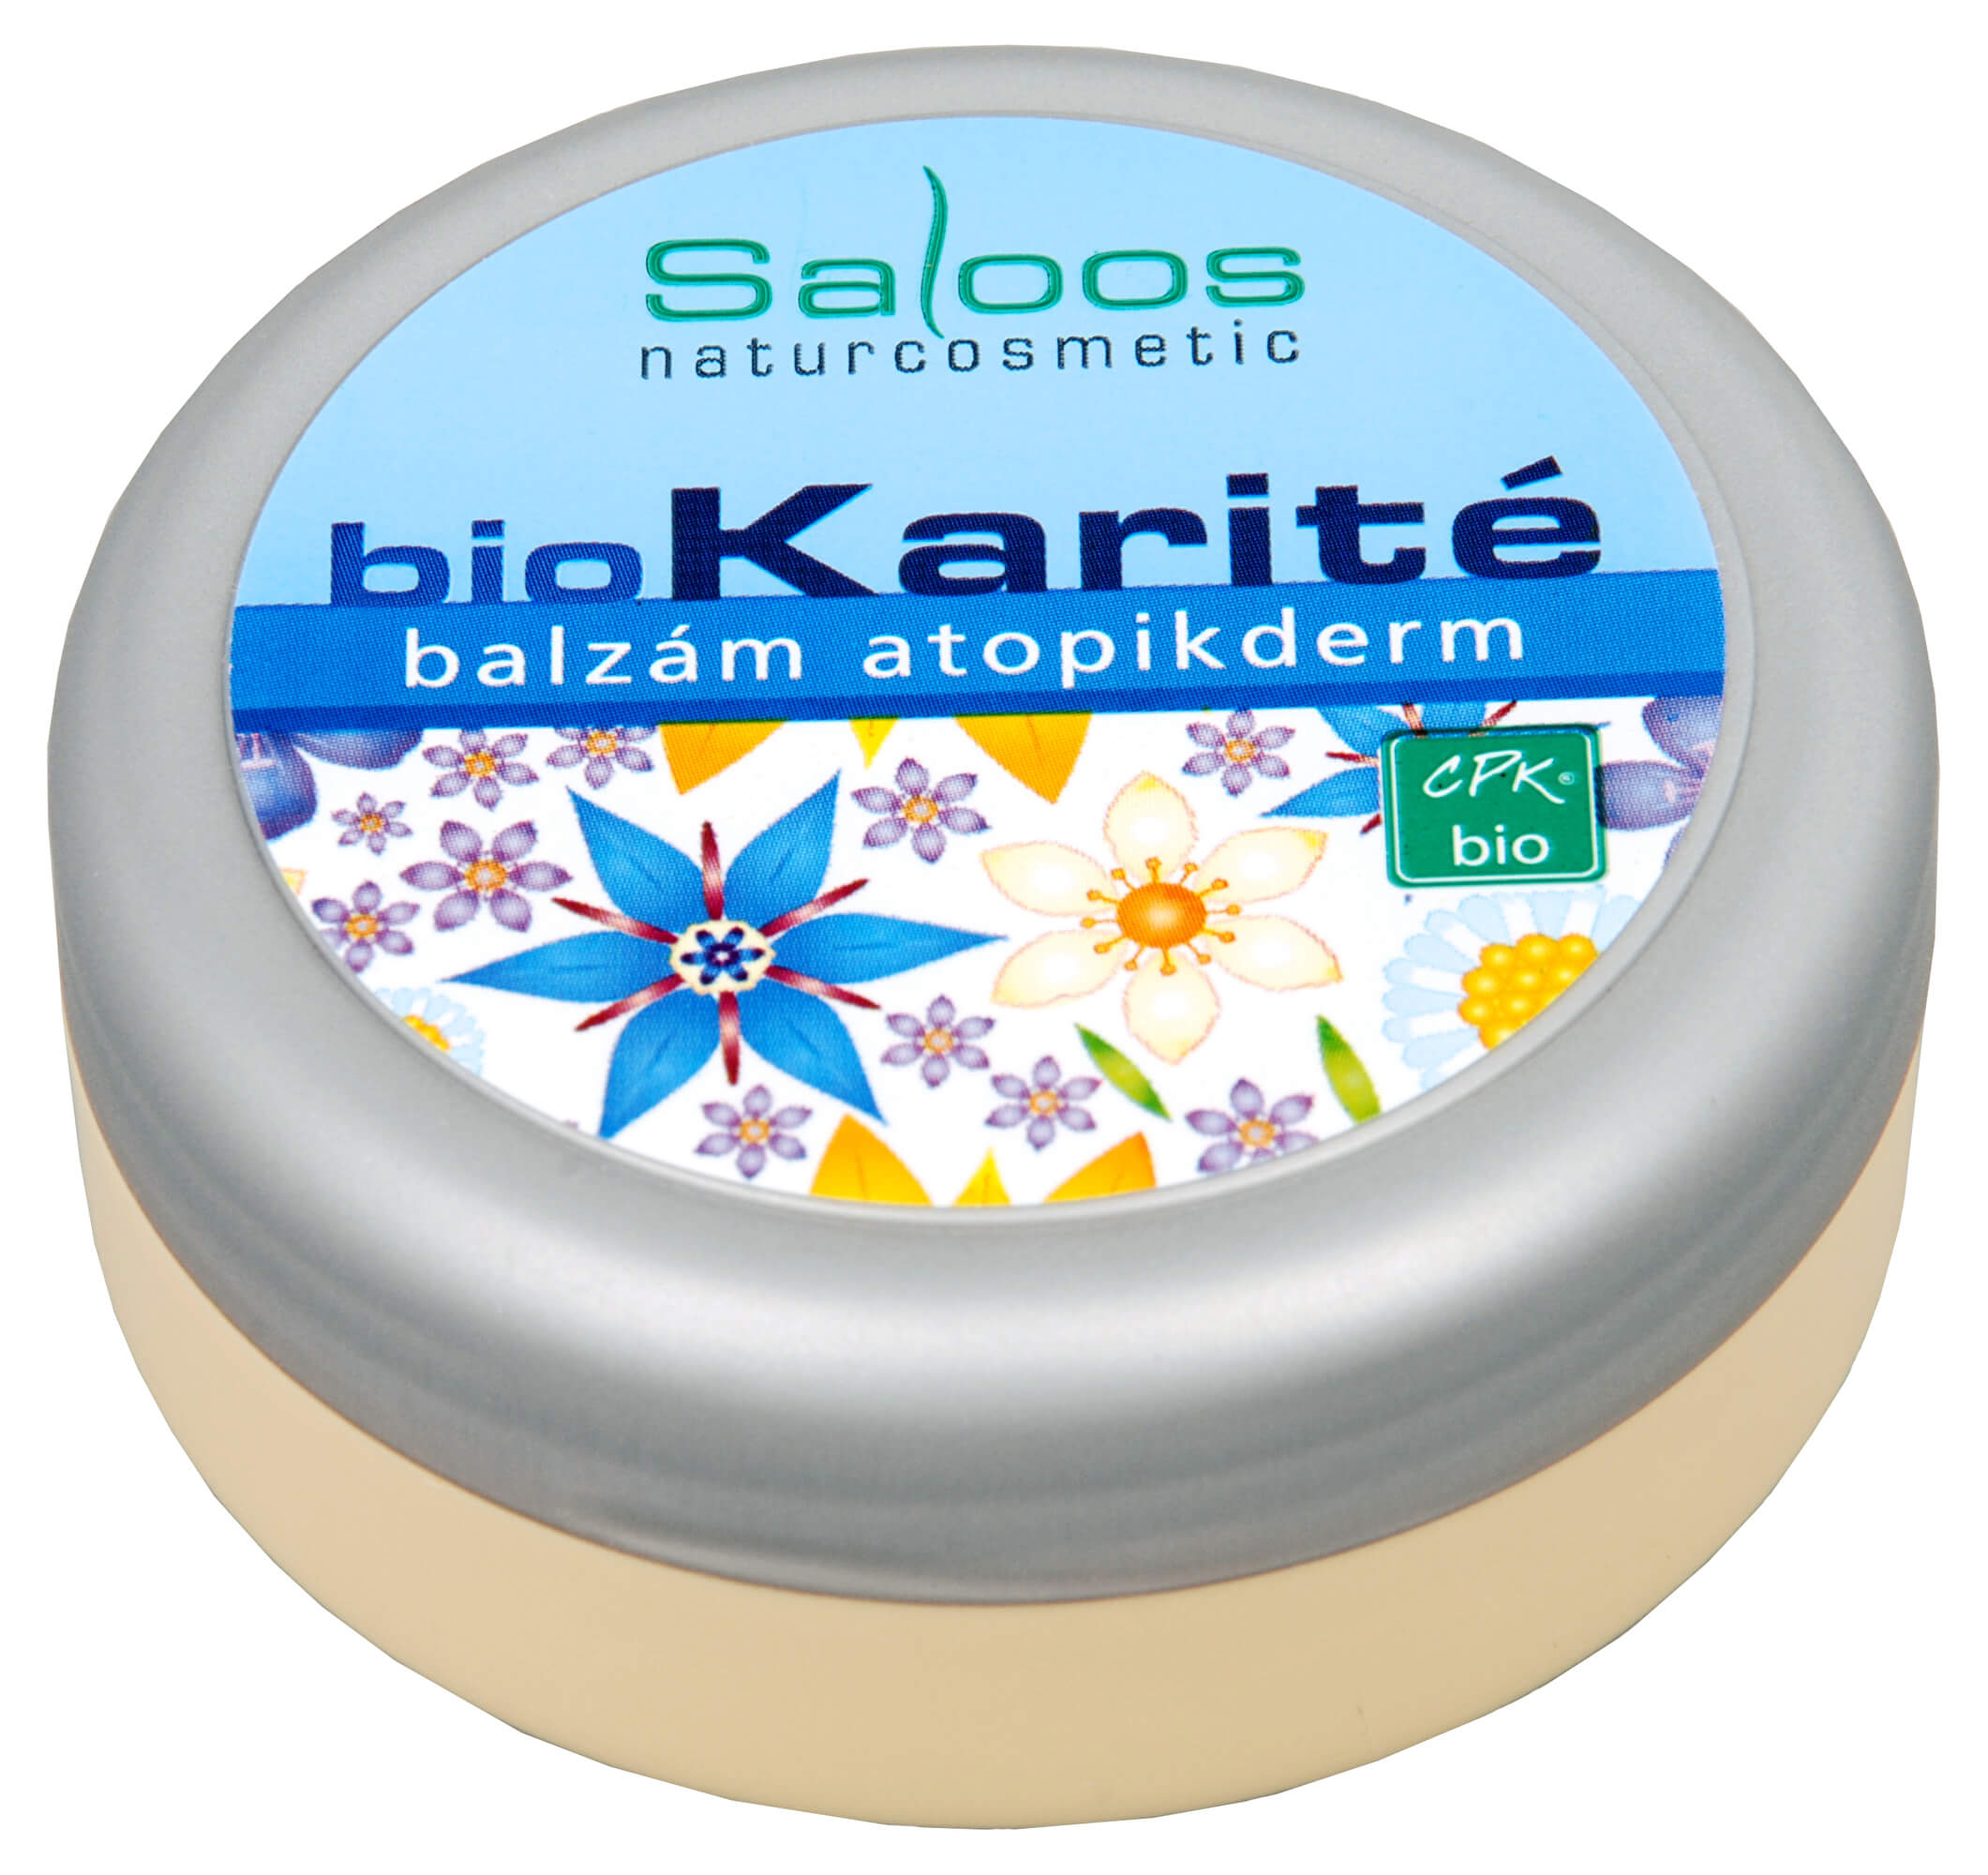 Zobrazit detail výrobku Saloos Bio Karité balzám - Atopikderm 250 ml